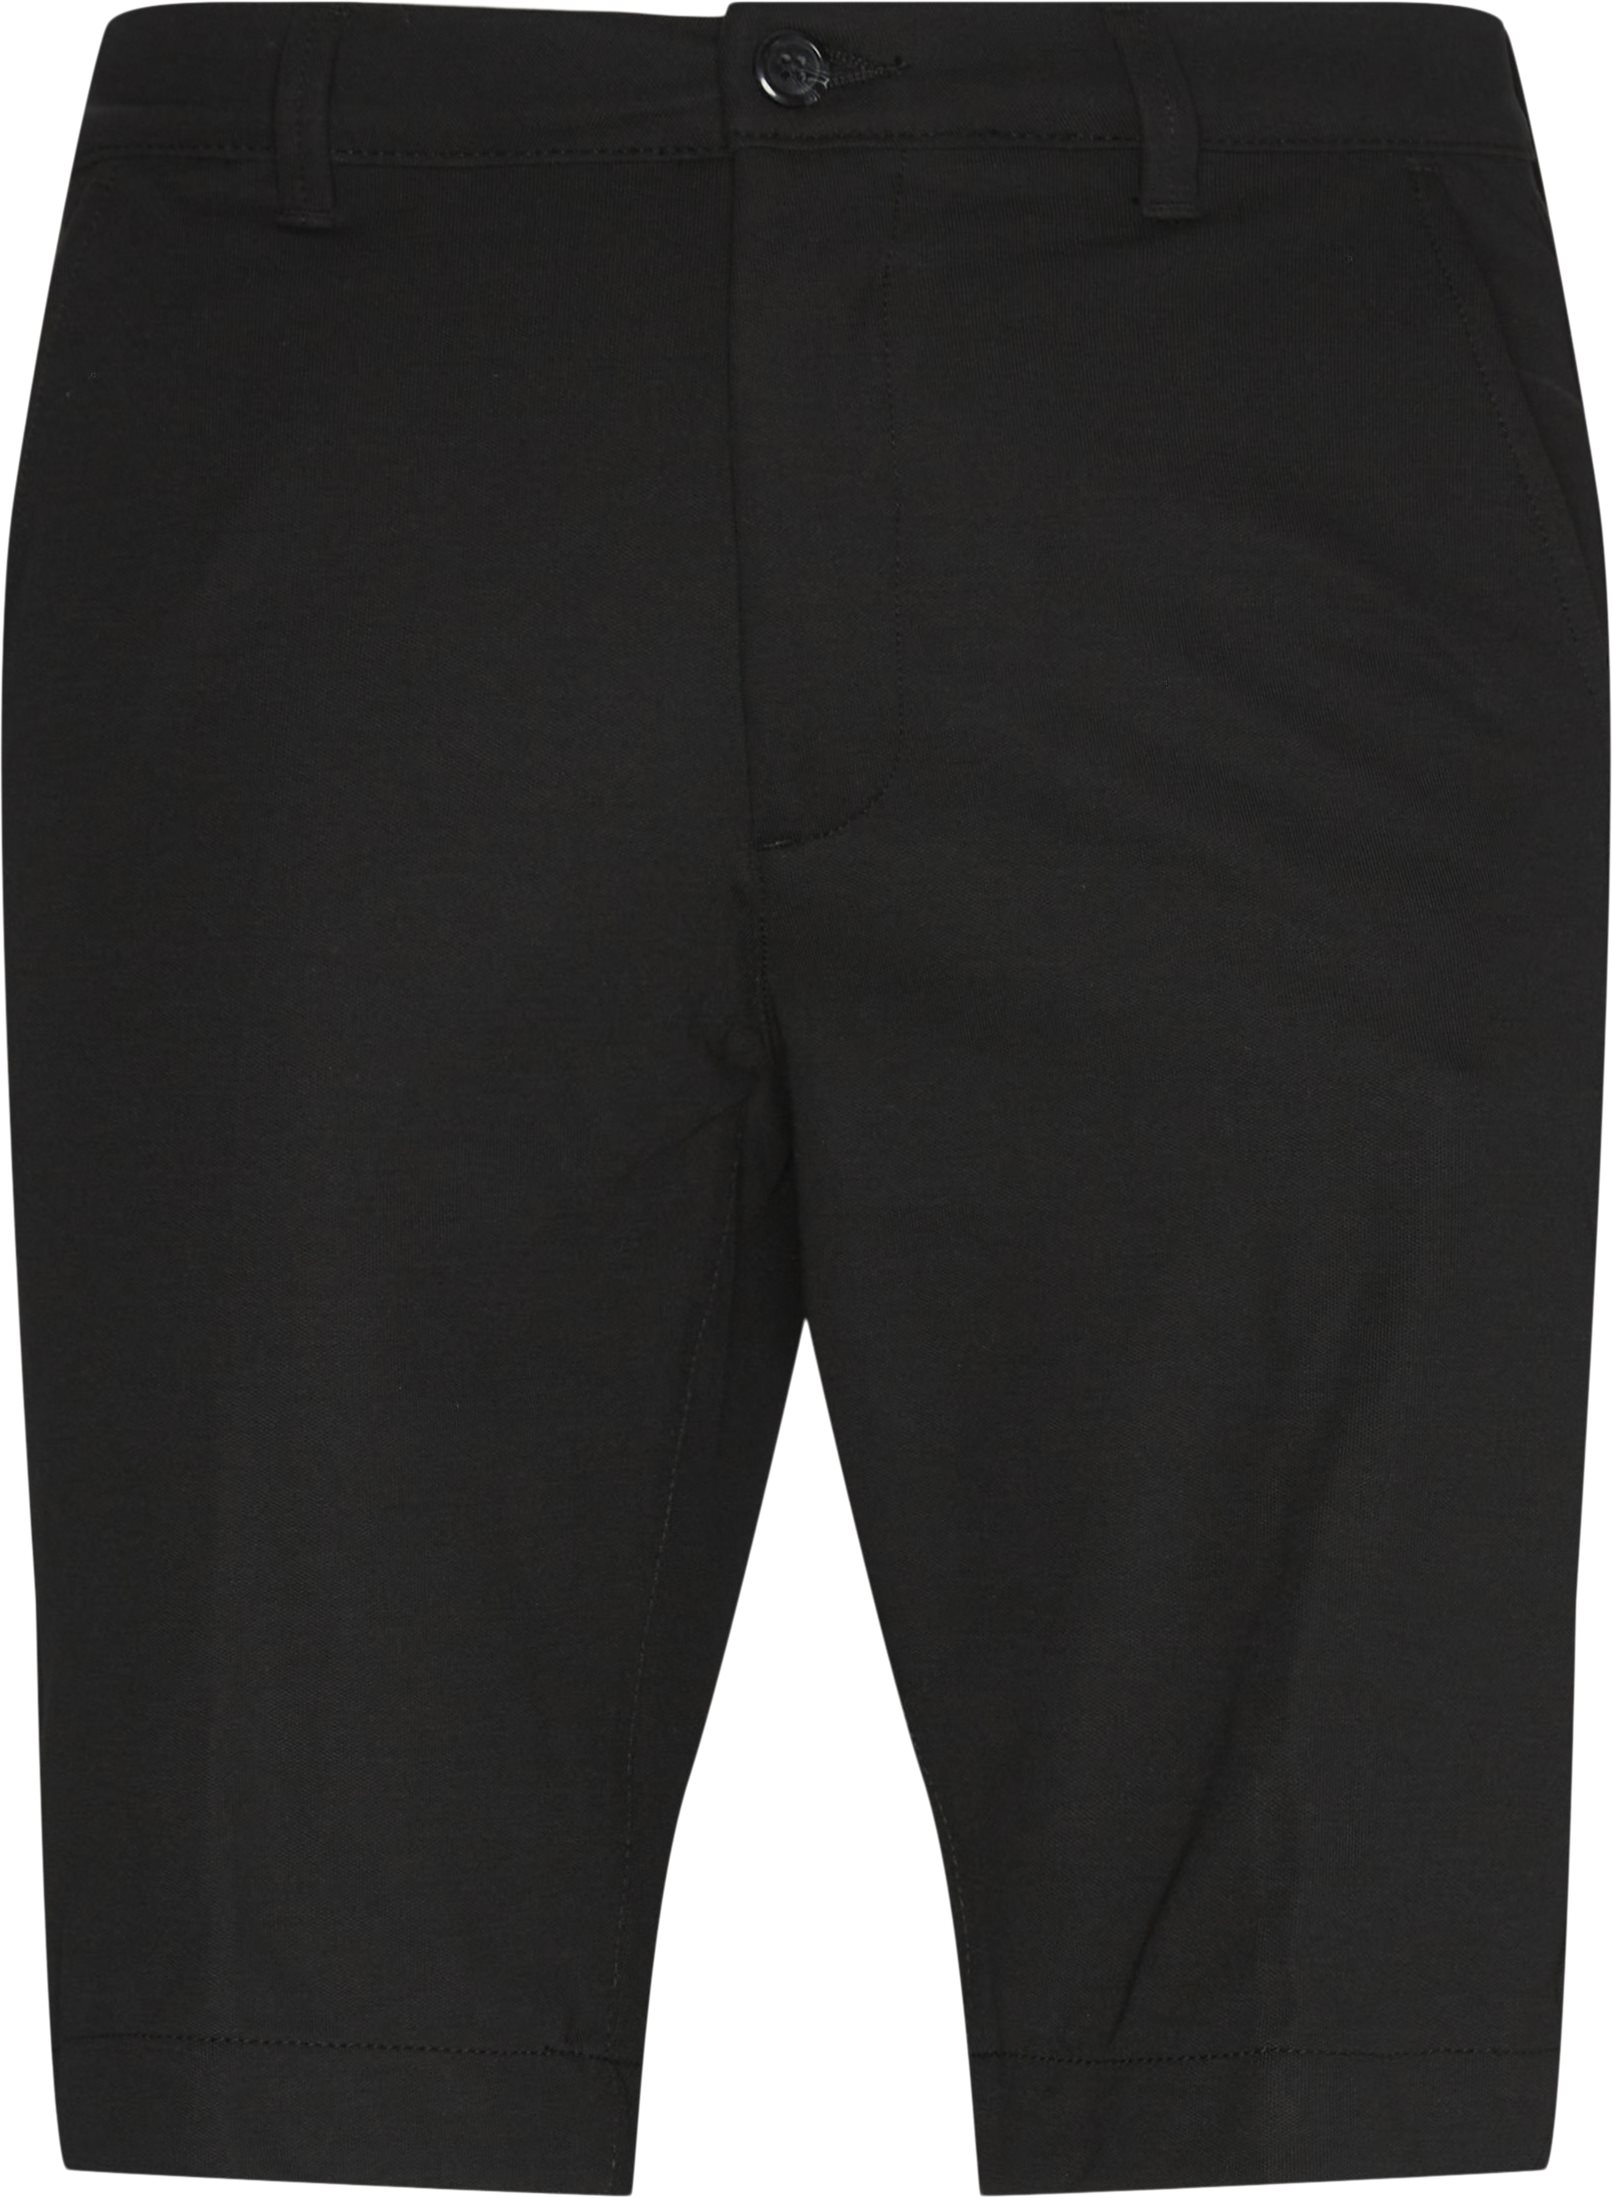 Florin shorts - Shorts - Regular fit - Svart